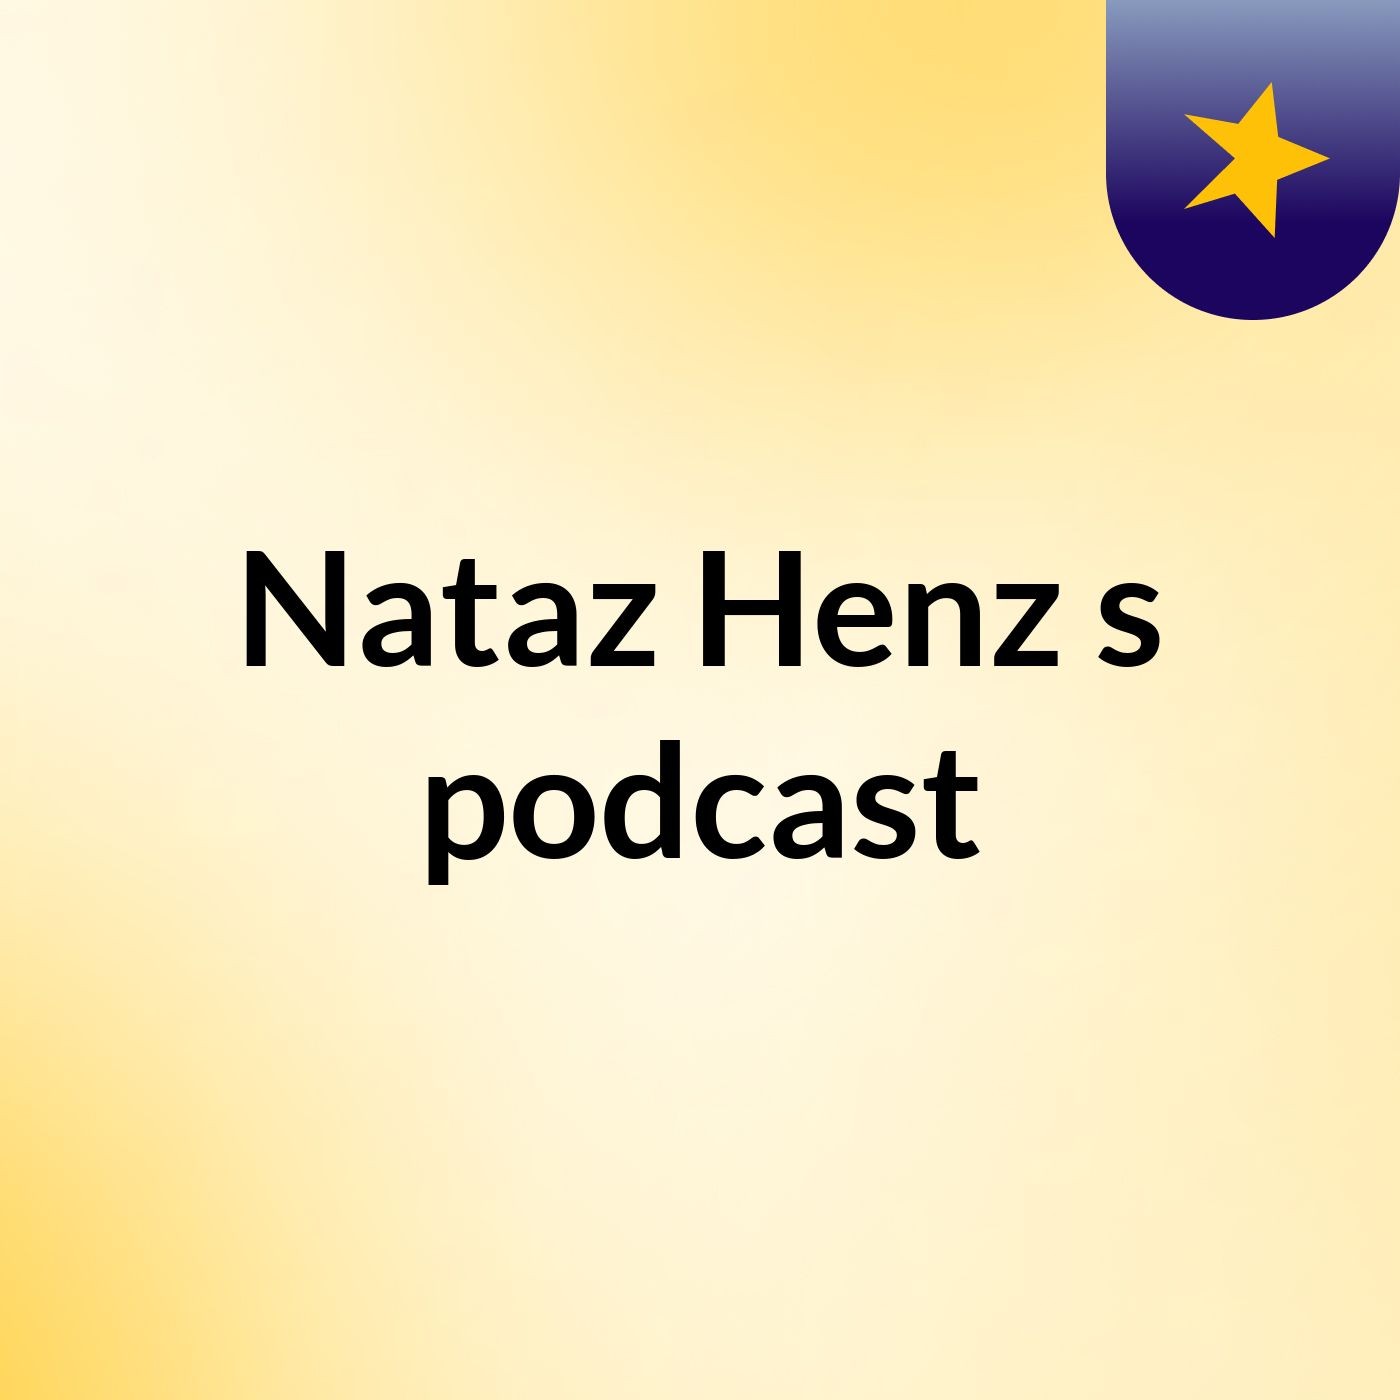 Nataz Henz's podcast